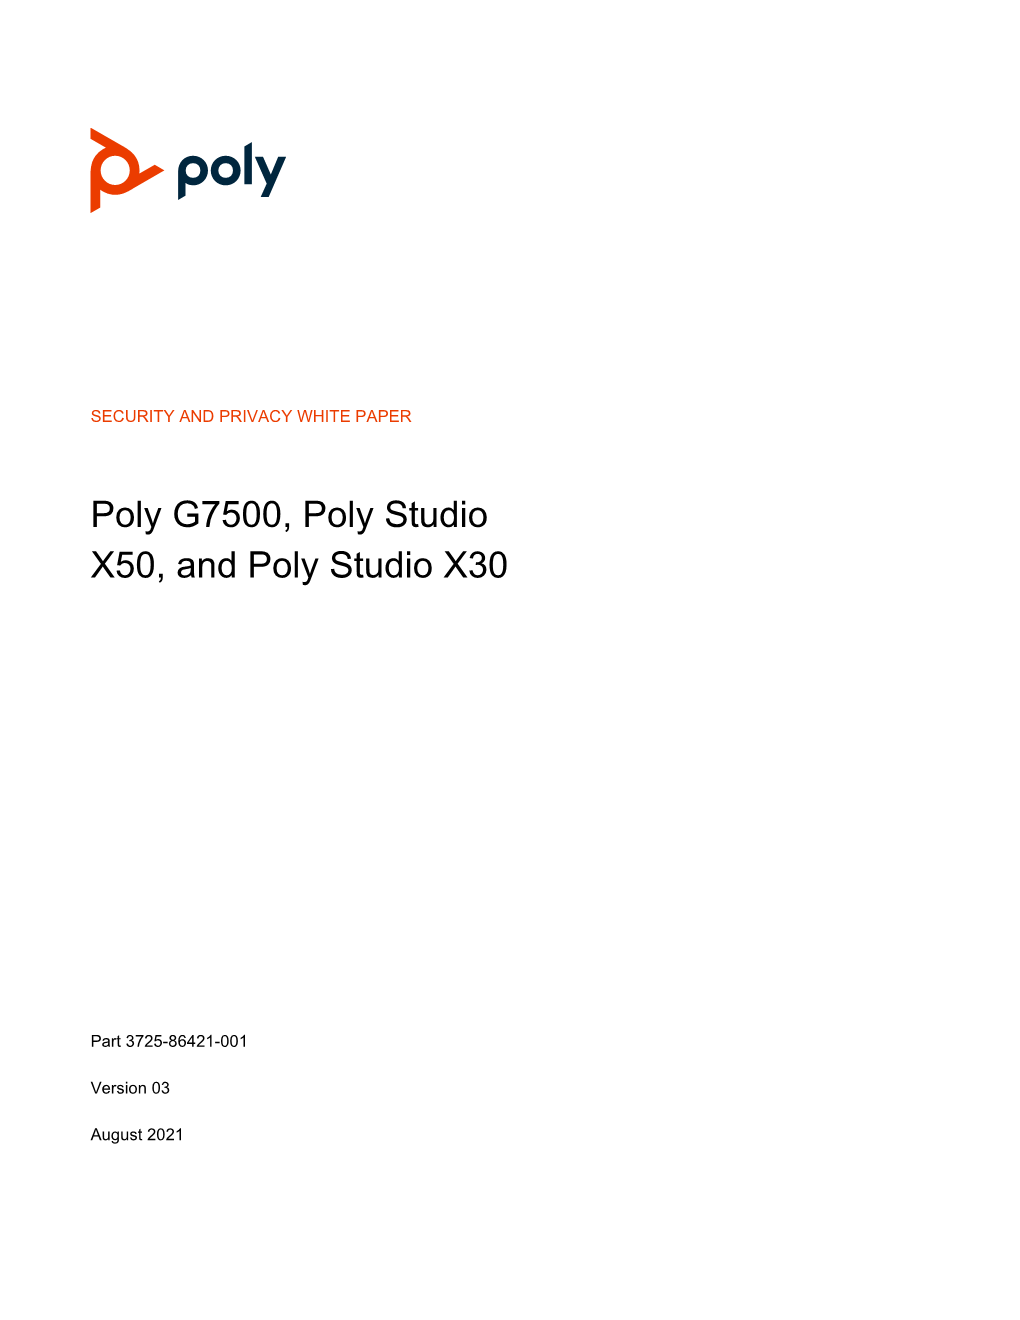 Poly G7500, Poly Studio X50, and Poly Studio X30